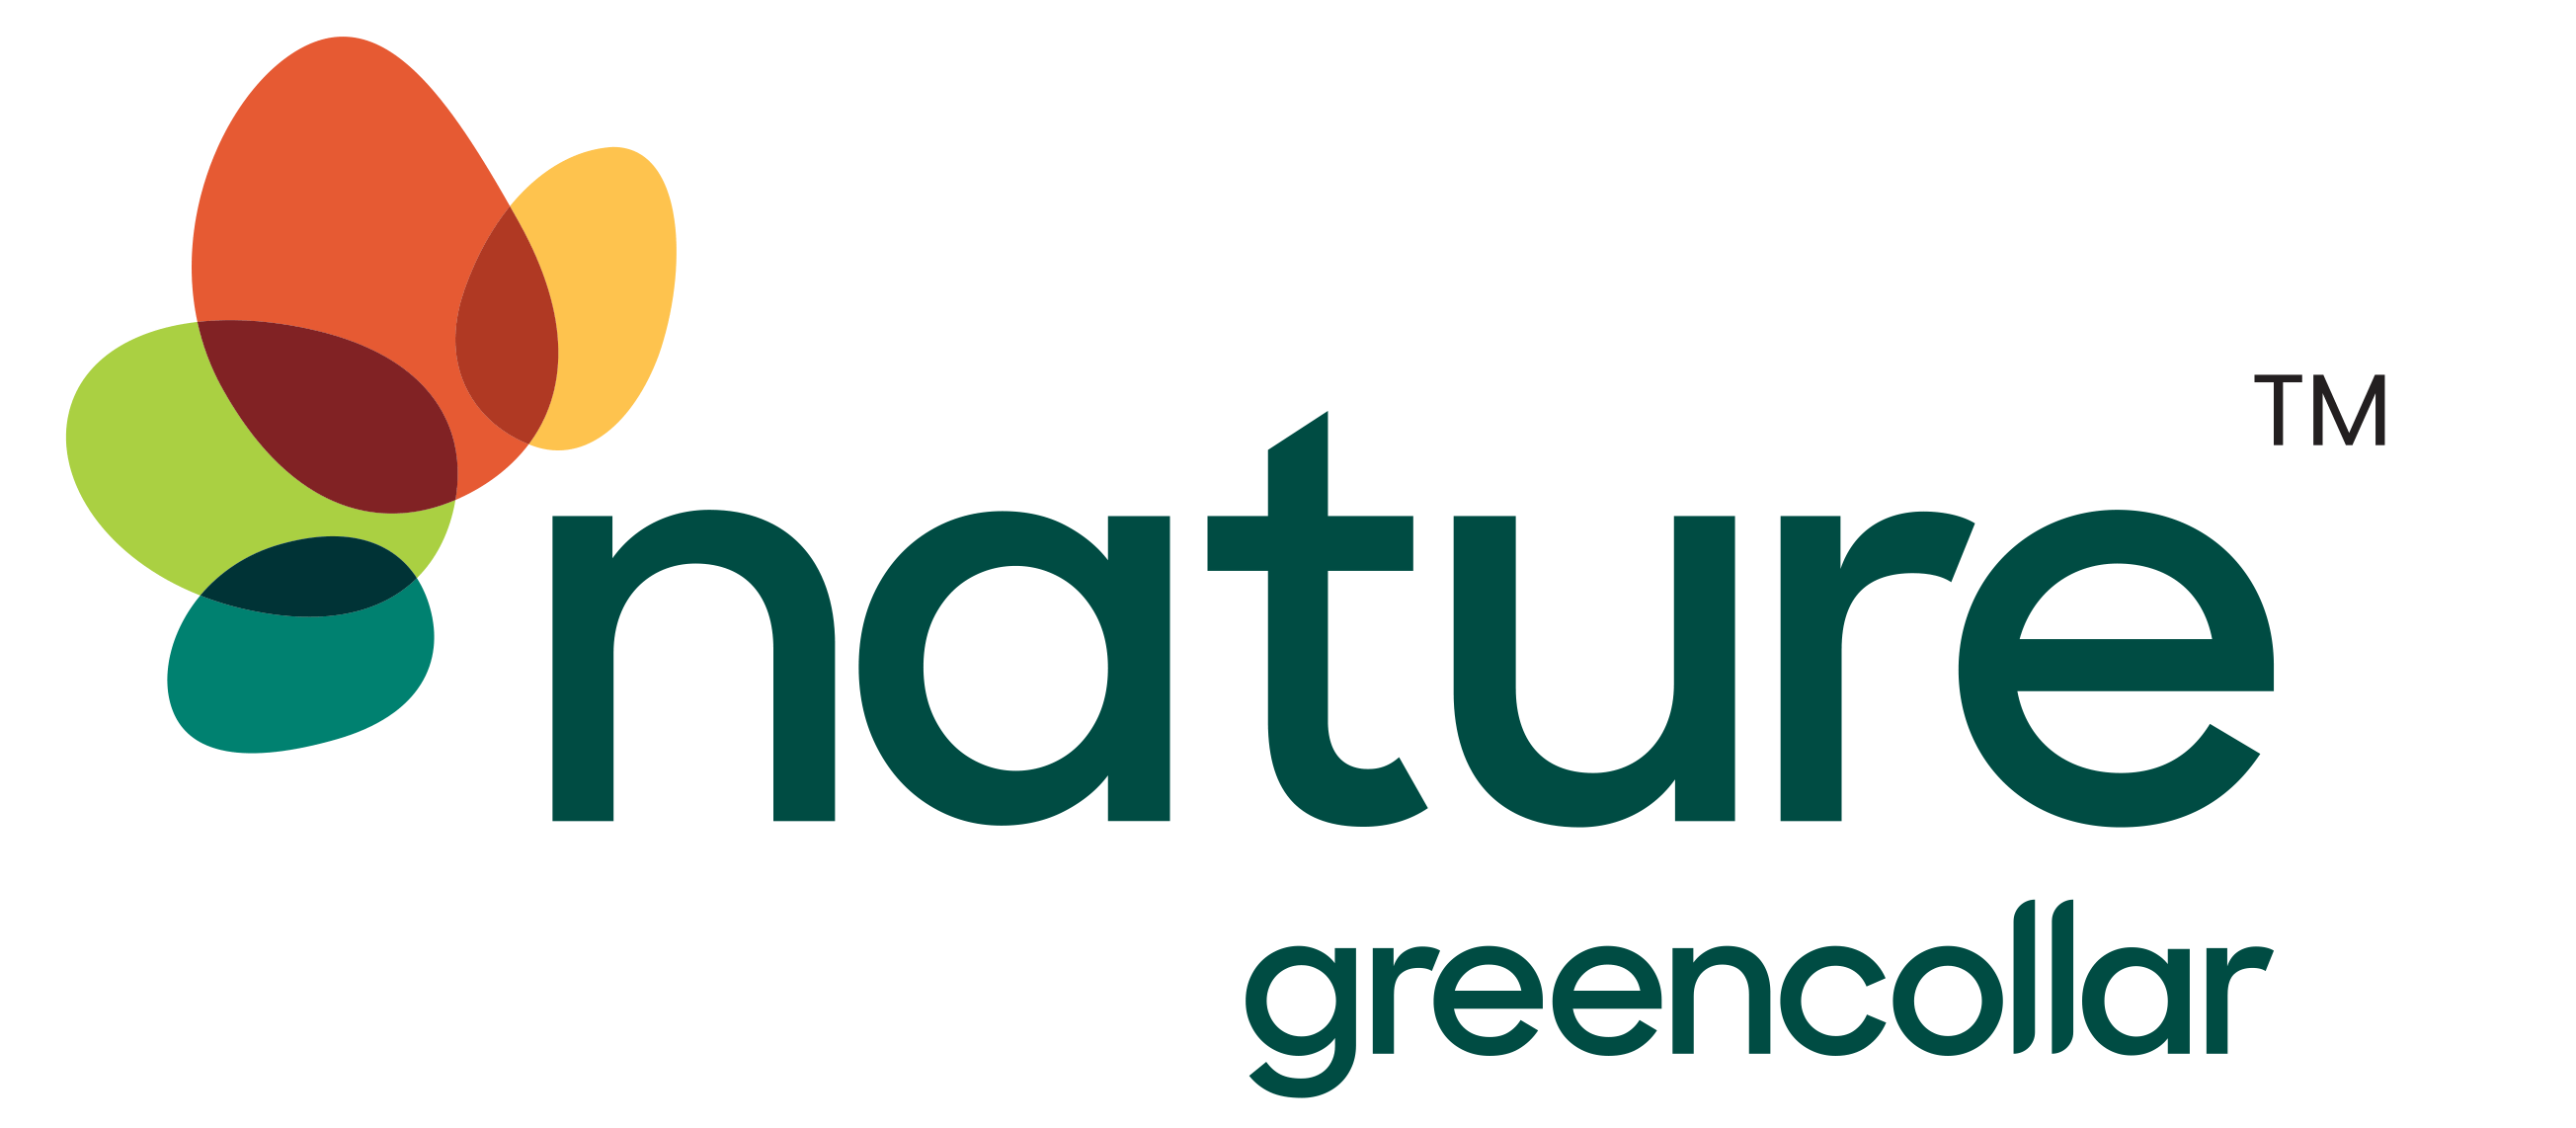 greencollar nature logo TM